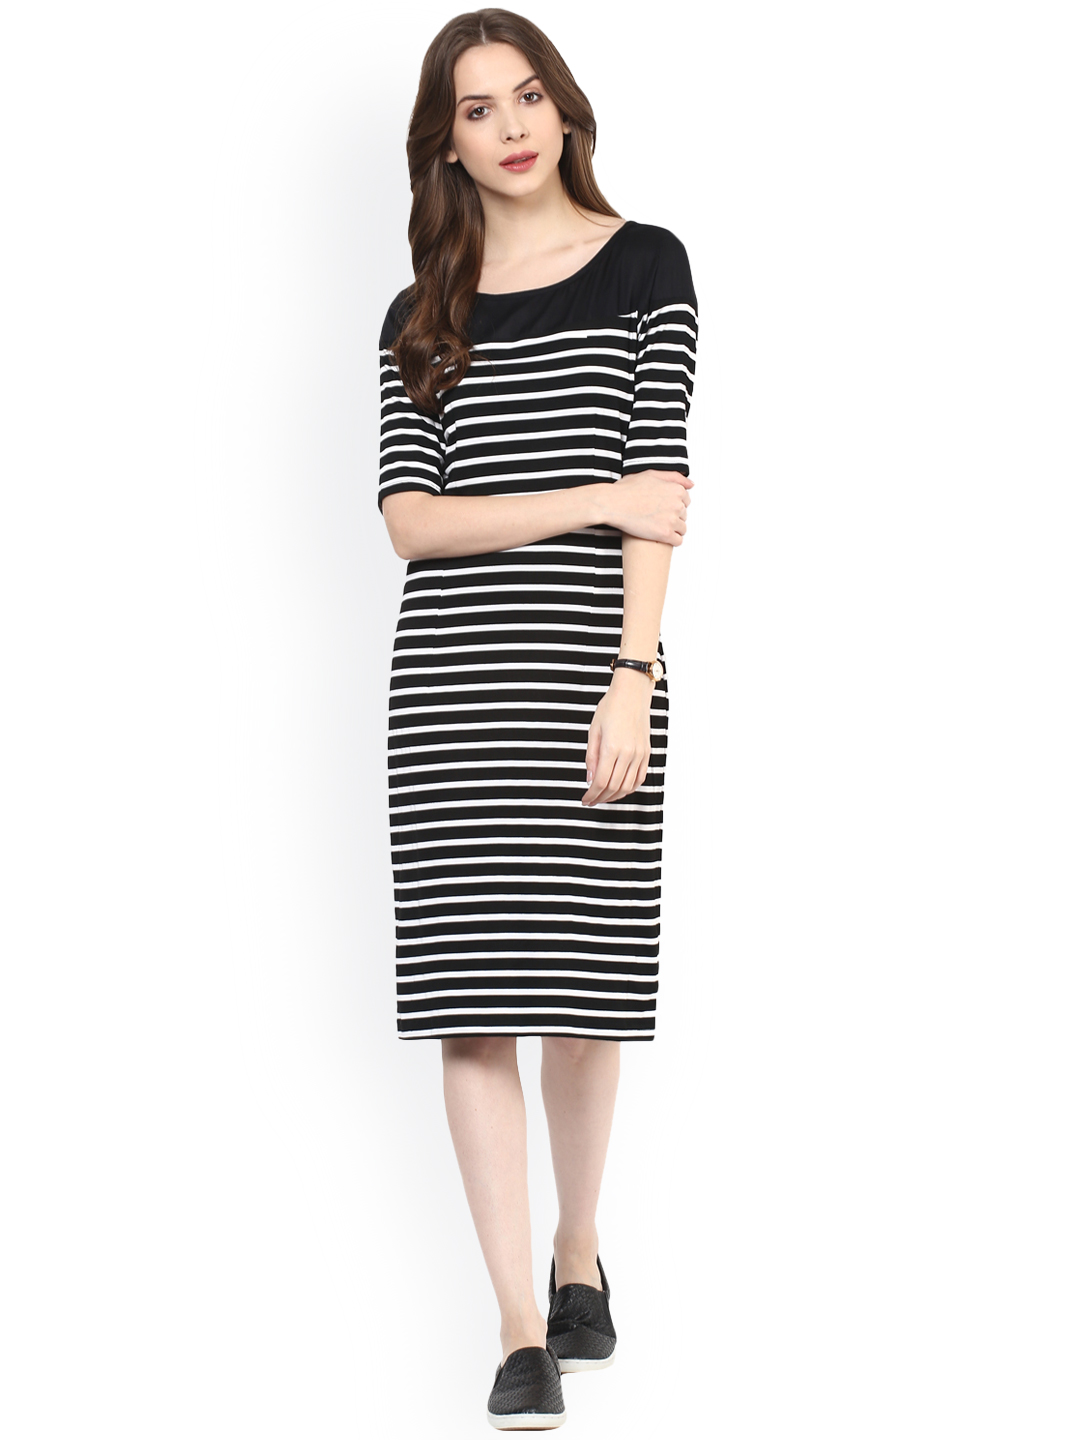 Zima Leto Women Black & White Striped Sheath Dress Price in India